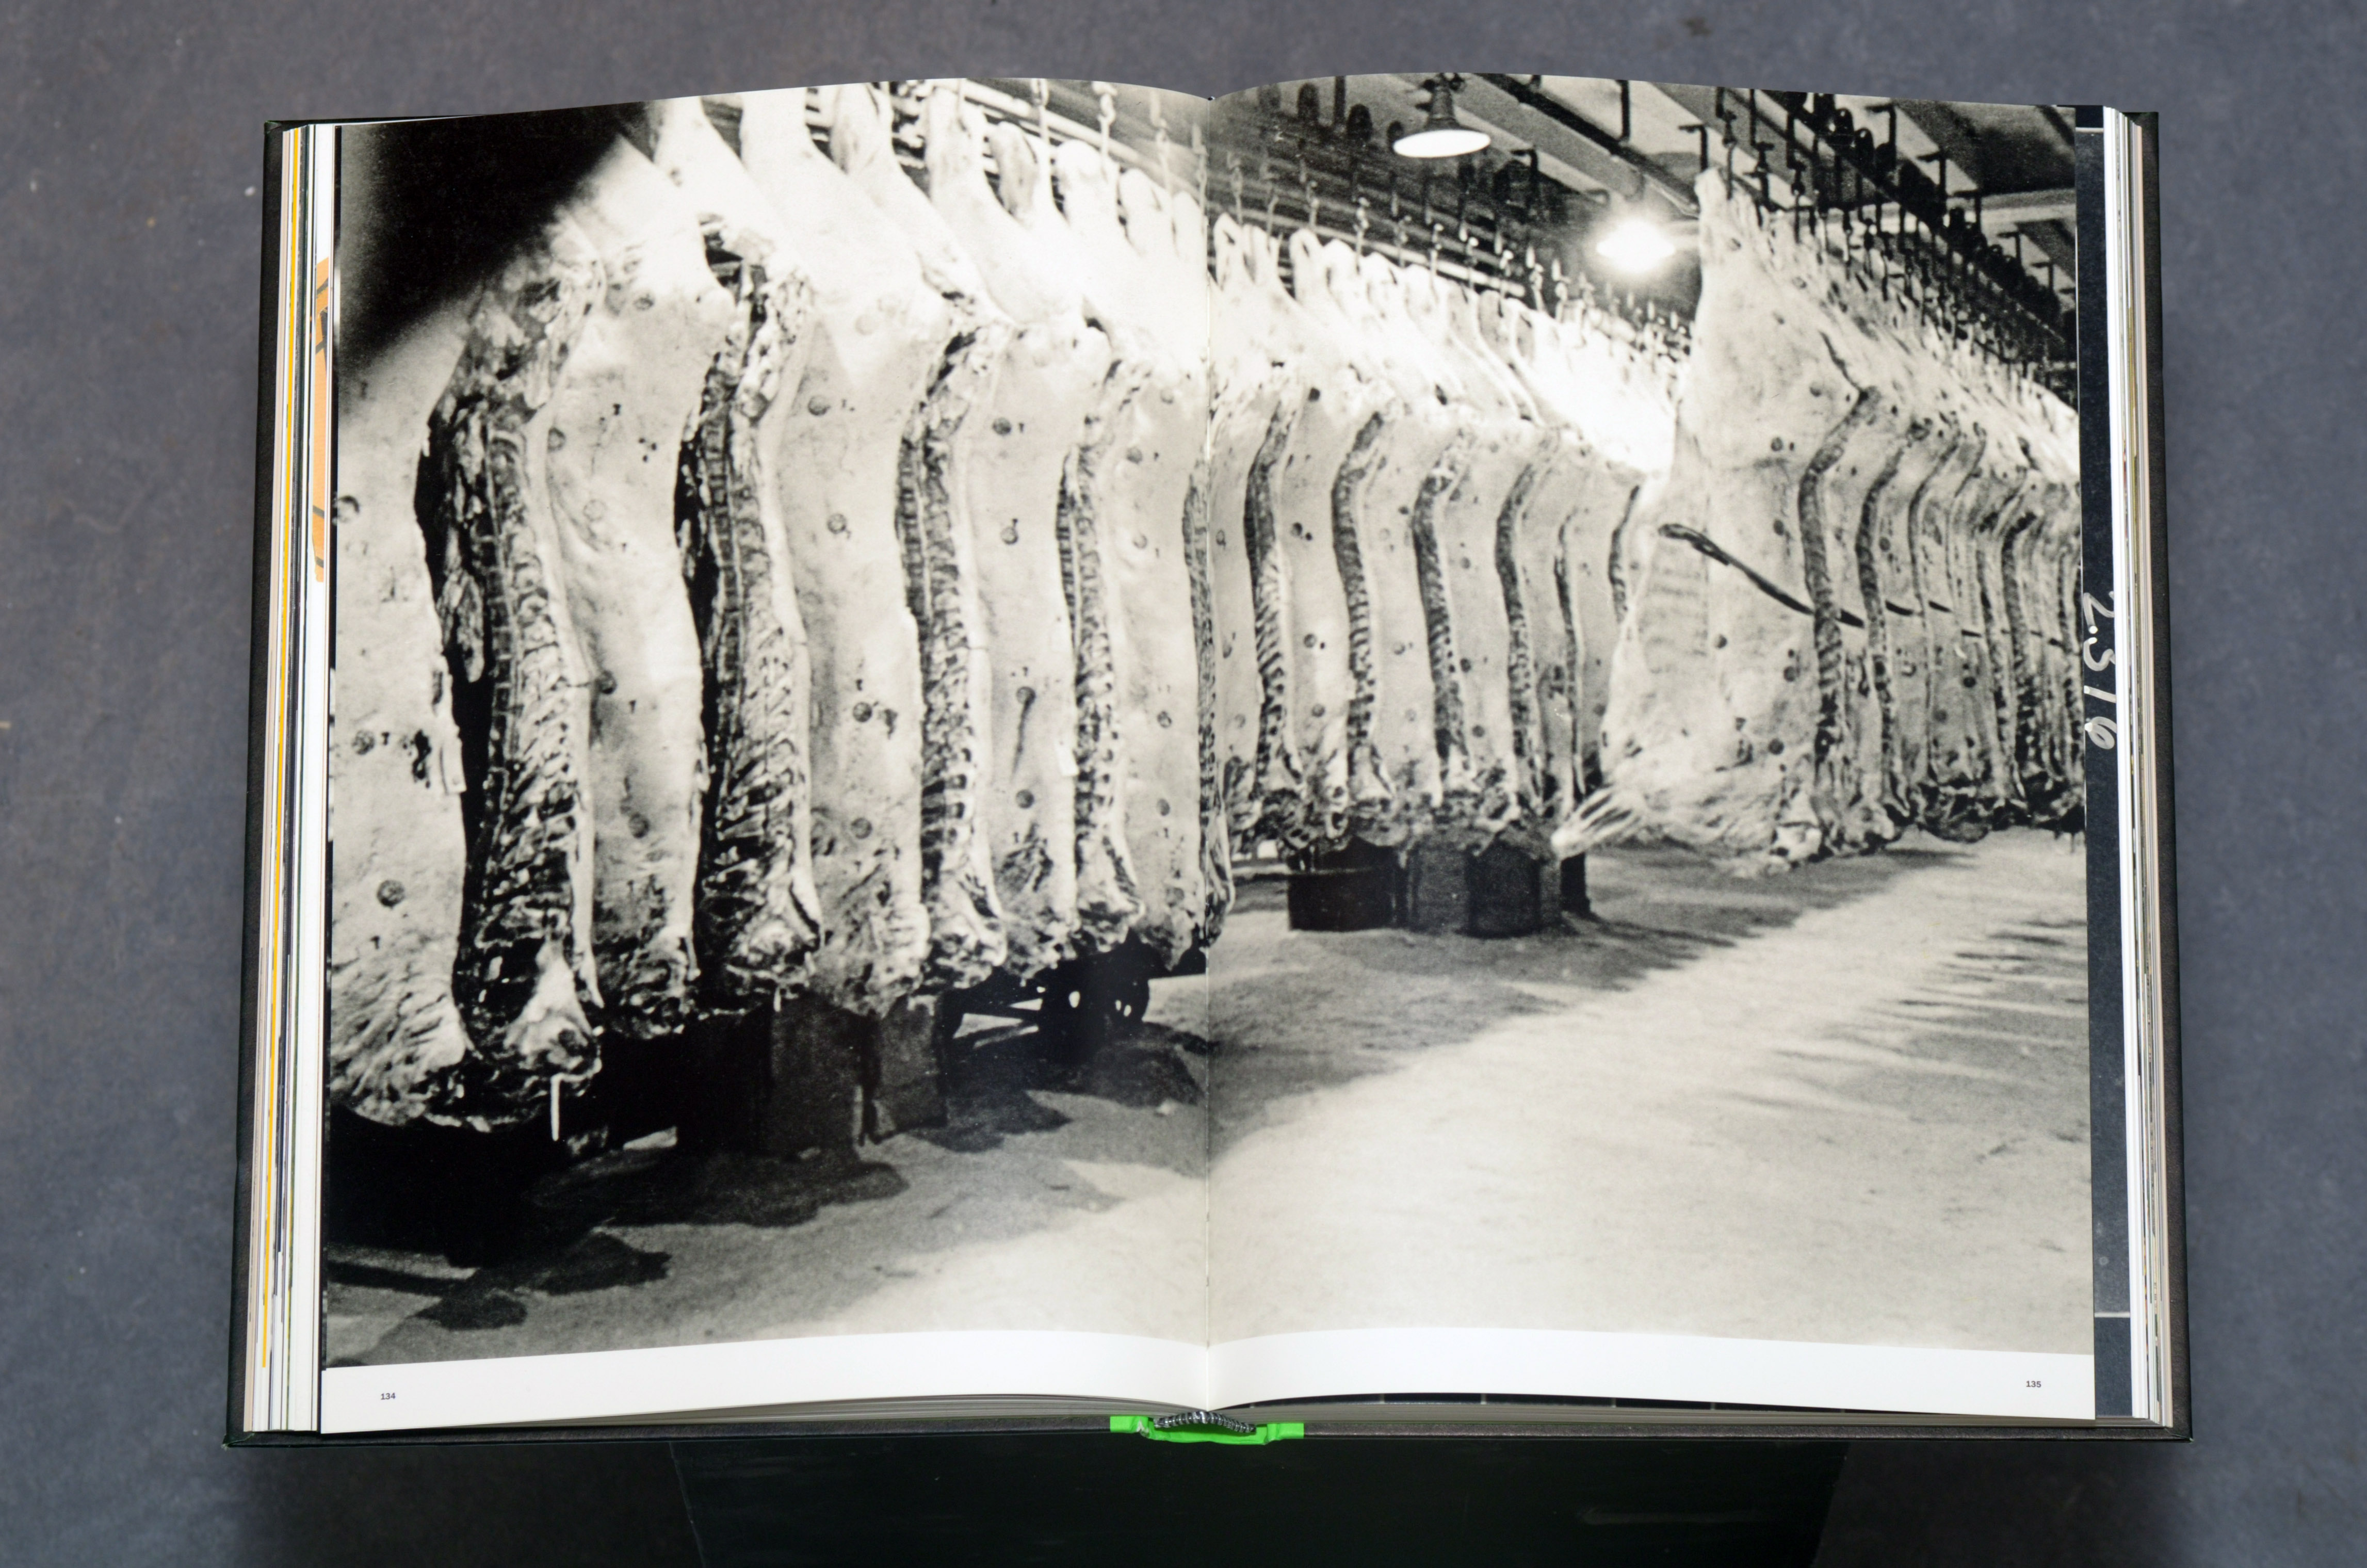 Stanley Kubrick: Racks of meat in cold storage in a meat locker, 1949